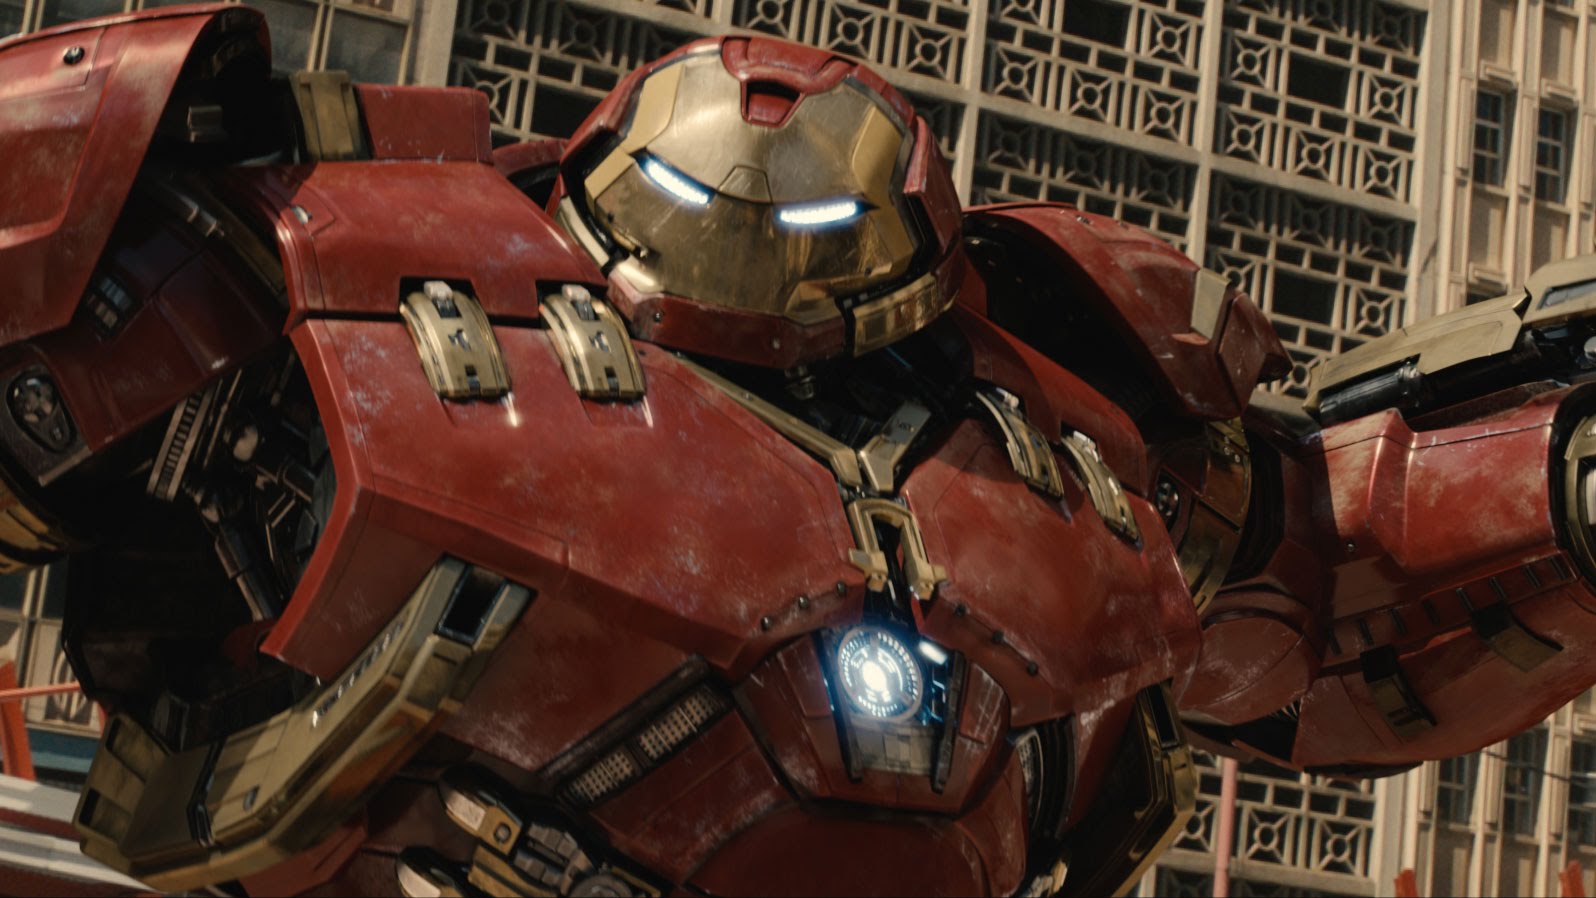 Avengers: Age Of Ultron HD wallpapers, Desktop wallpaper - most viewed